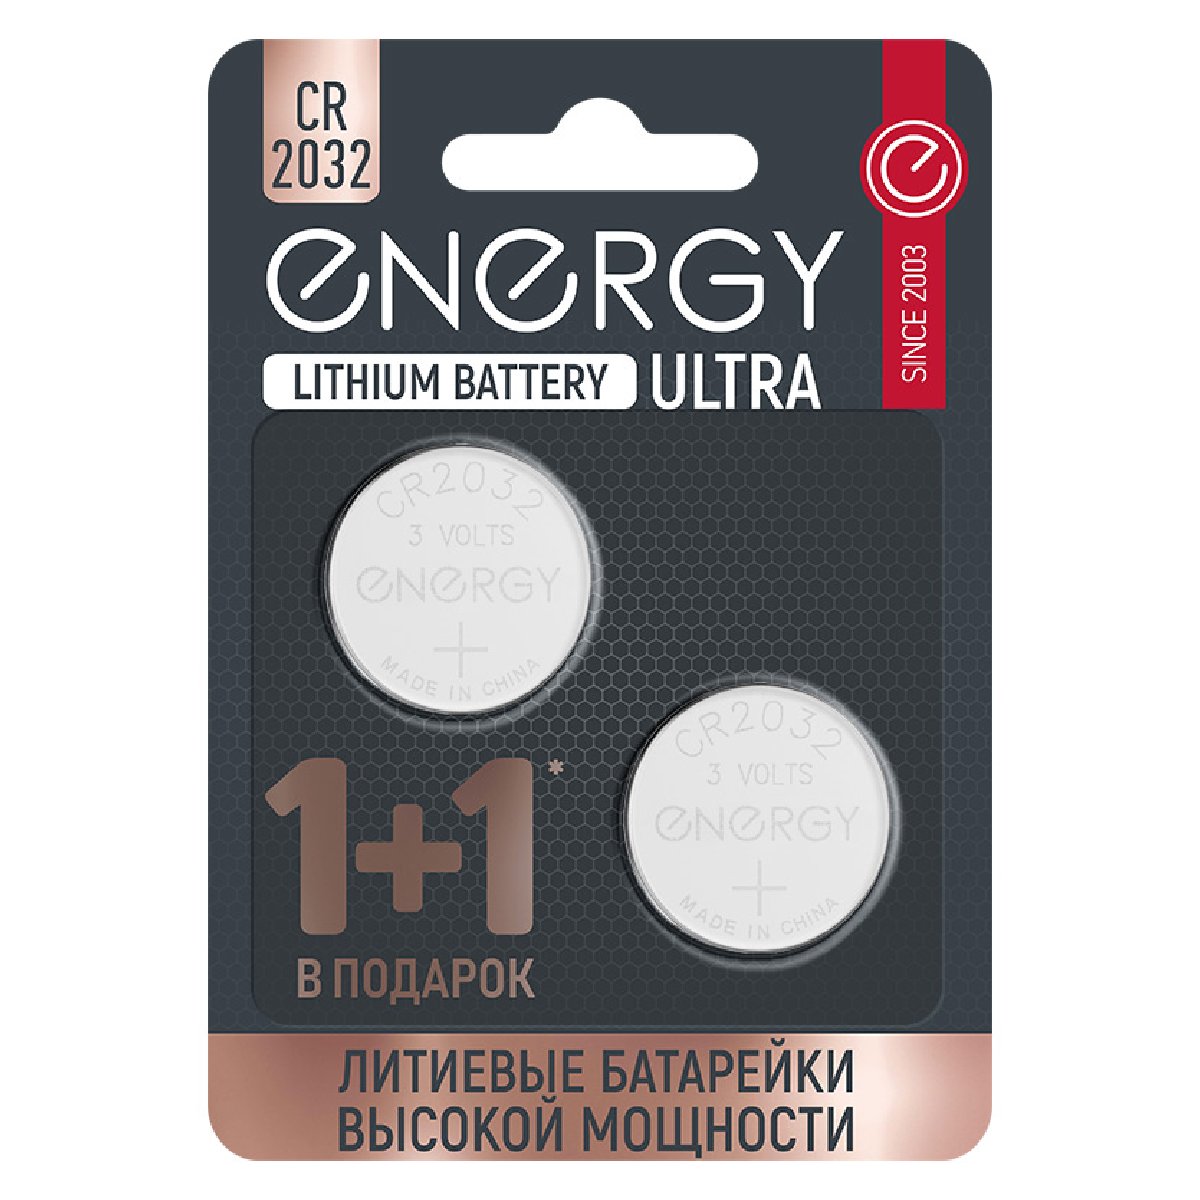   Energy Ultra CR2032 2B (104409)